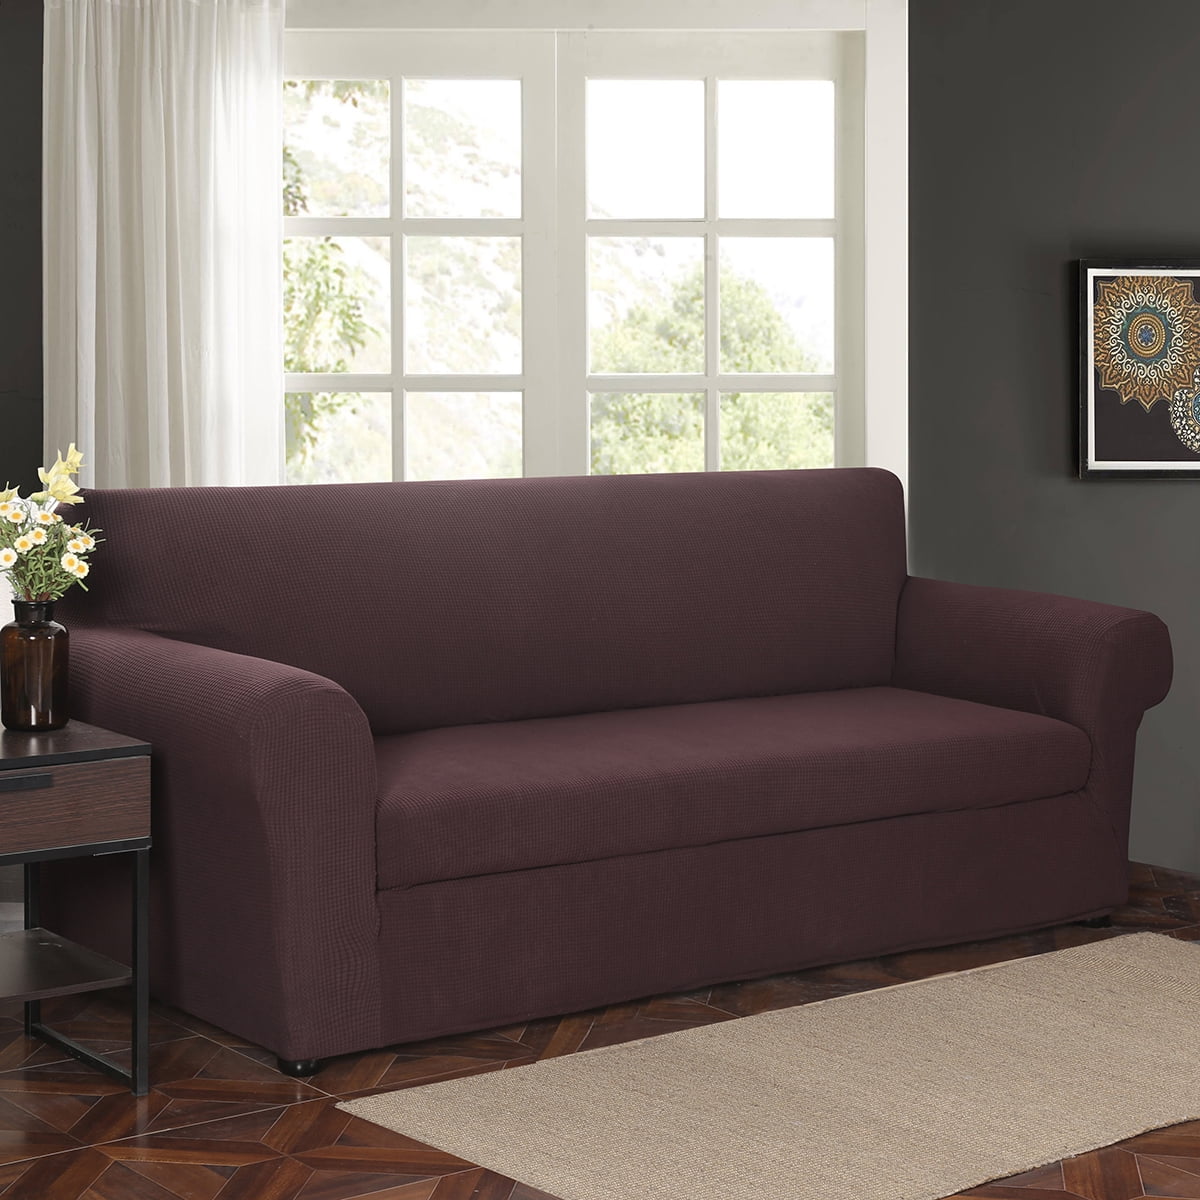 Details about   PureFit Stretch Sofa Slipcover Spandex Jacquard Non Slip Soft Couch Sofa Cover 